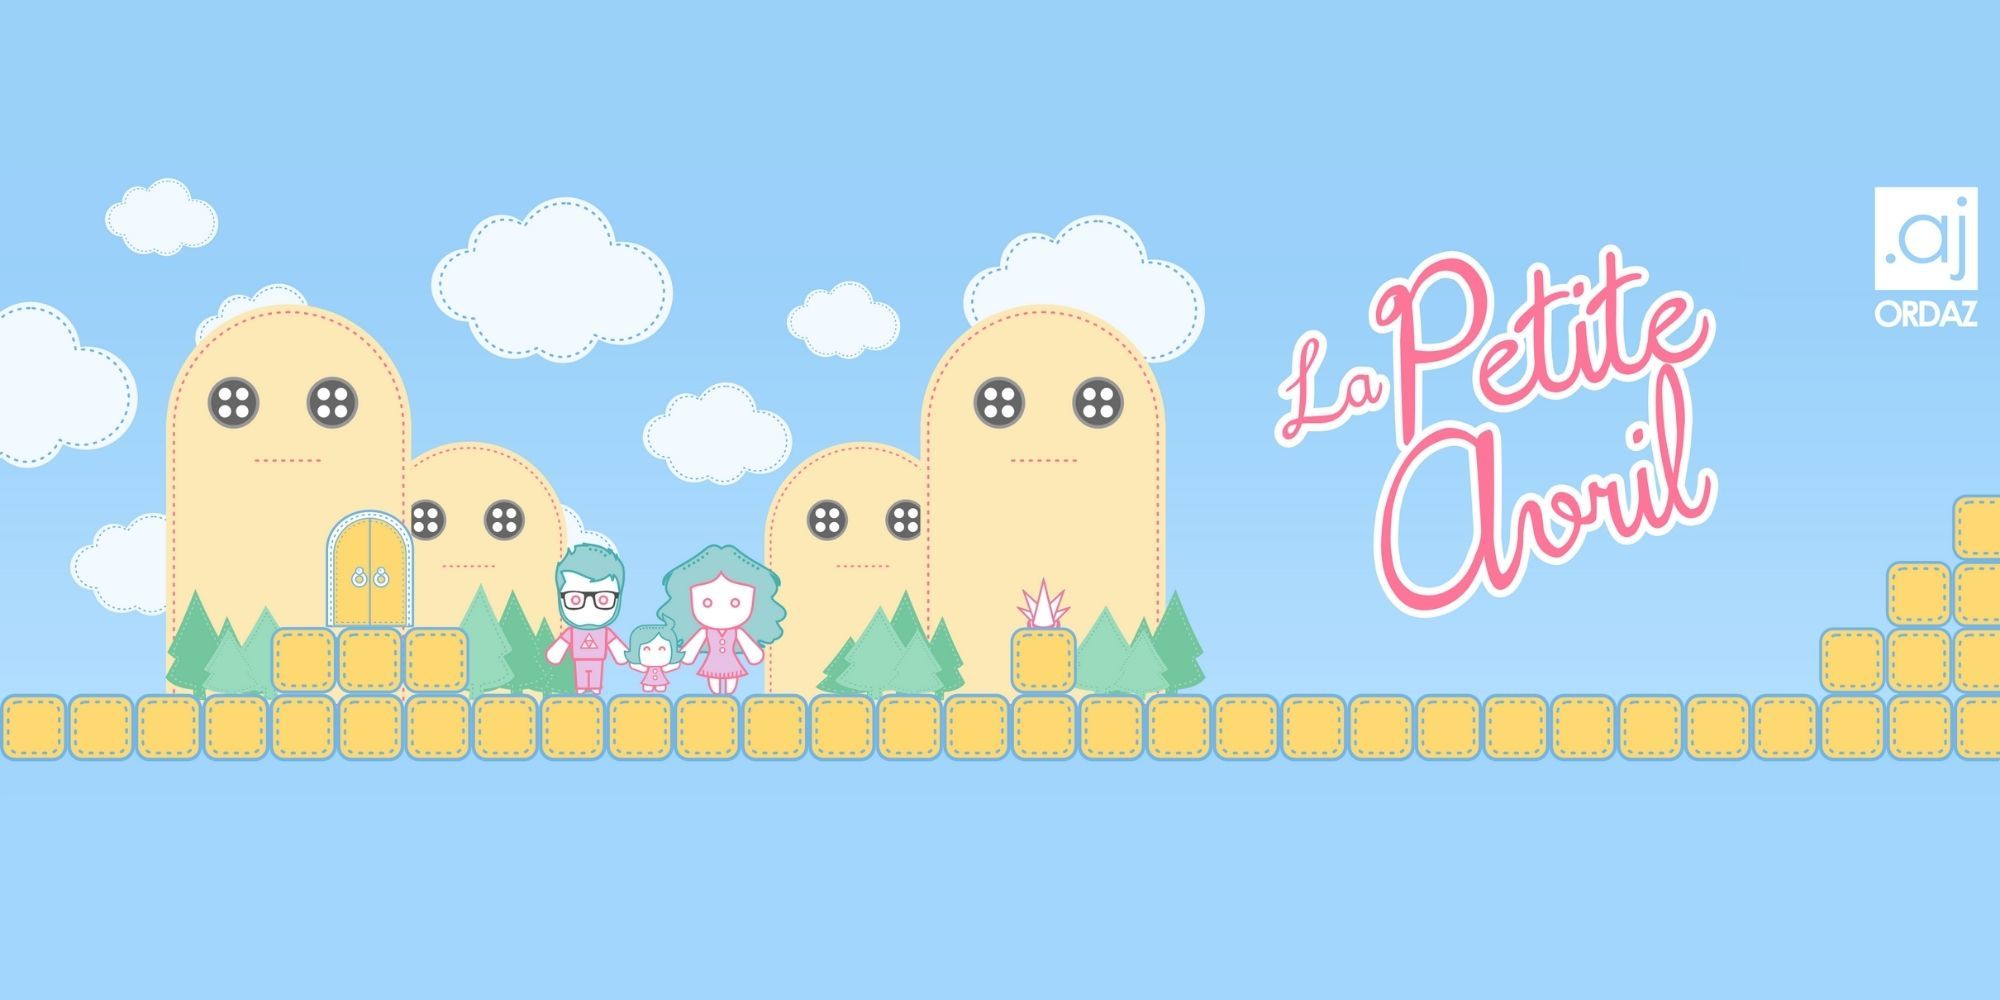 La Petite Avril family and houses - Aj Ordaz